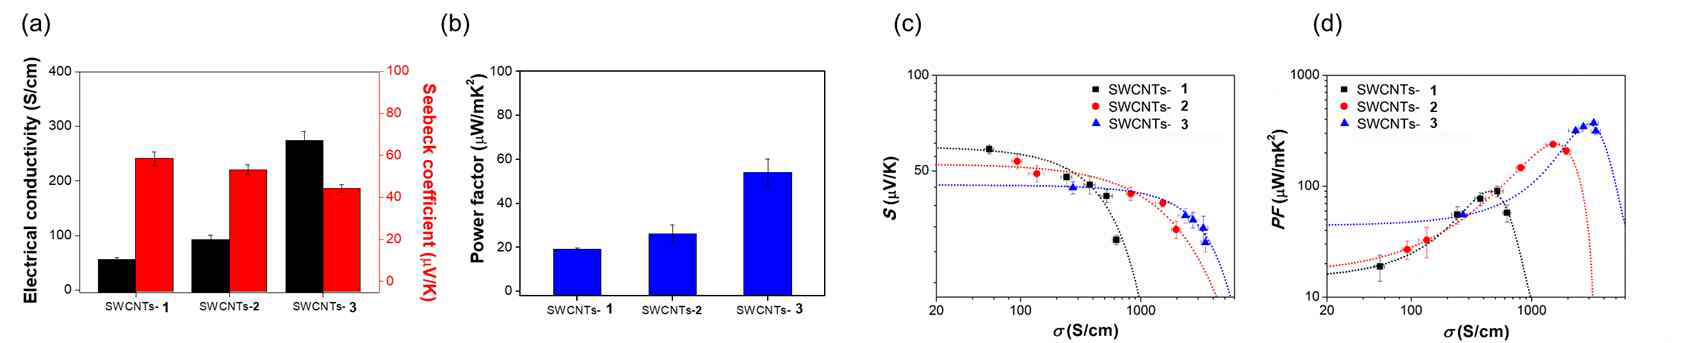 SWCNTs/유기단분자 초분자 구조체의 (a) 전기전도도, 제백계수, (b) power factor, F4TCNQ가 도핑된 SWCNTs/유기단분자 초분자 구조체의 (c) 전기전도도-제백계수, (d) 전기전도도-power factor